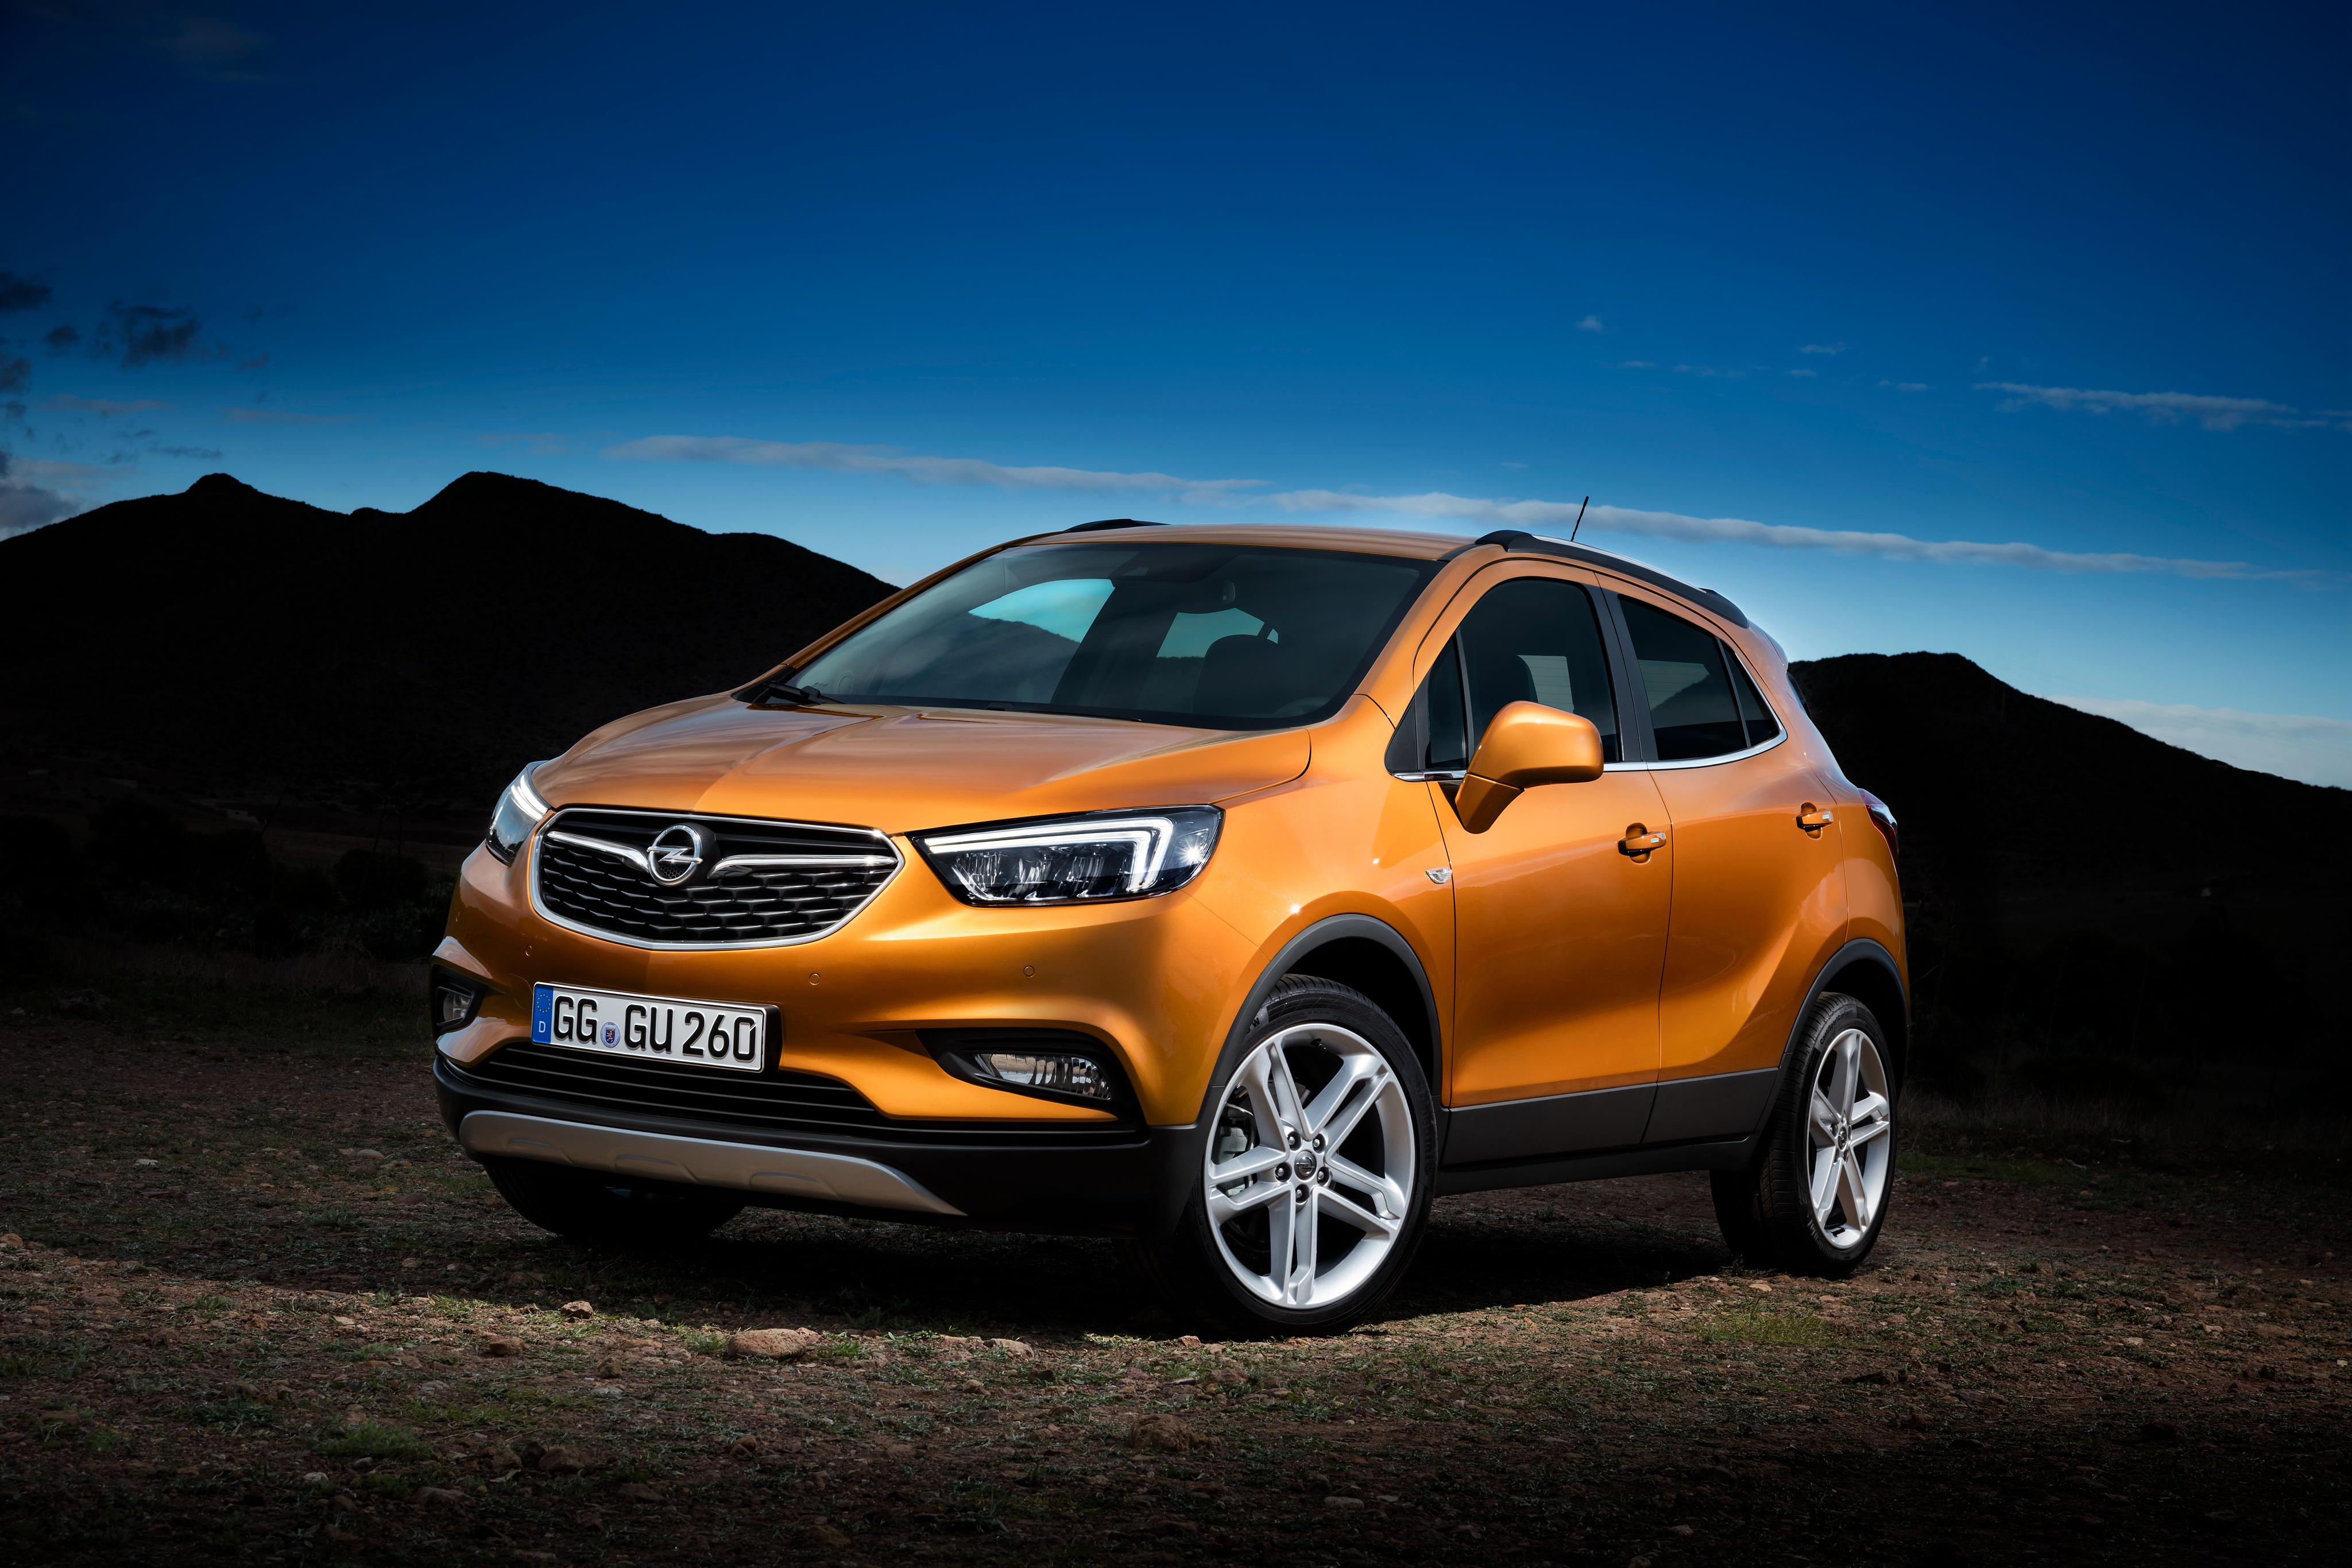 Télécharger des fonds d'écran Opel Moka HD